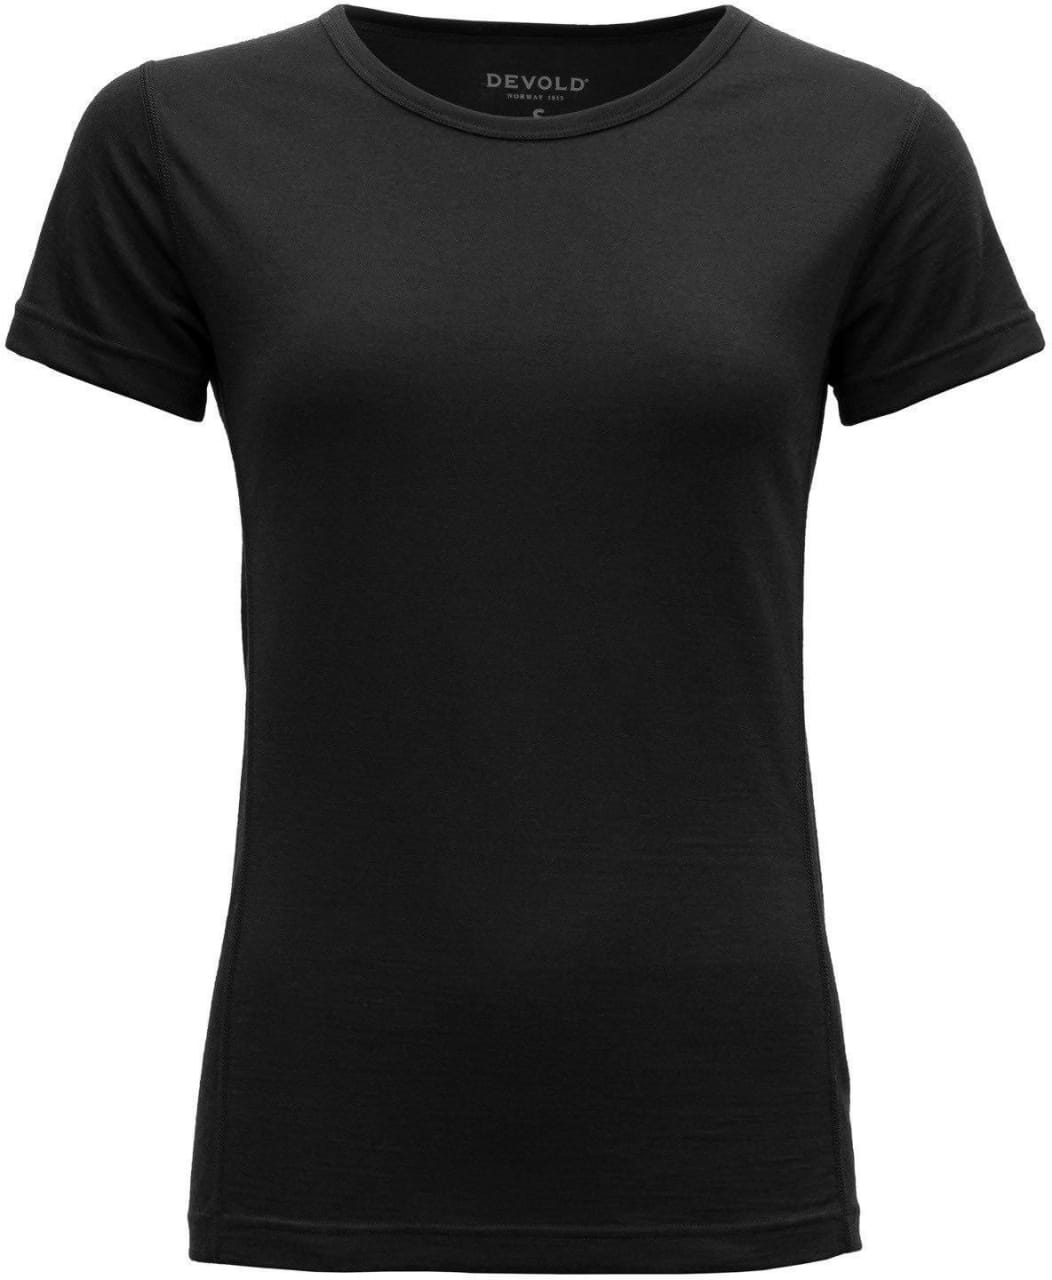 Outdoor-T-Shirt für Frauen Devold Breeze Merino 150 T-Shirt Woman